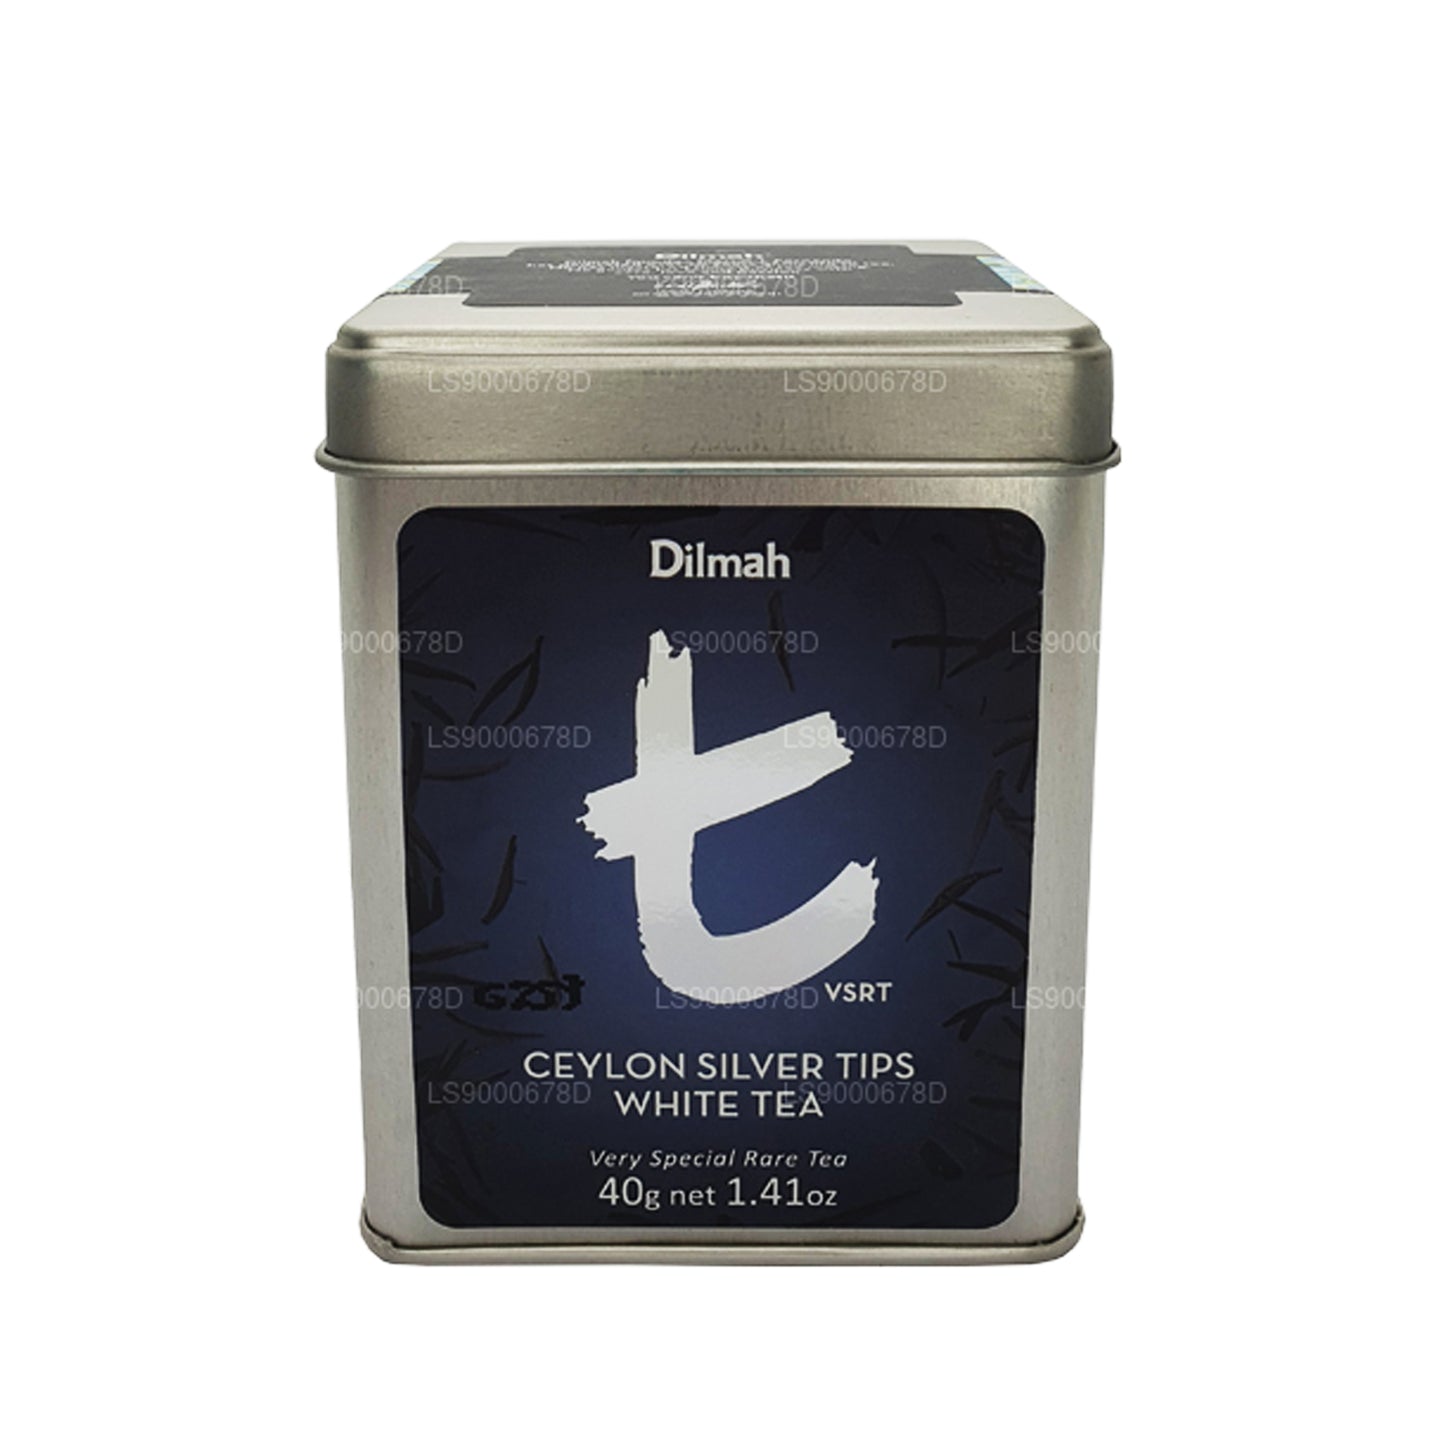 Dilmah Ceylon Silver Tips Biała Herbata (40g) Caddy Loose Tea